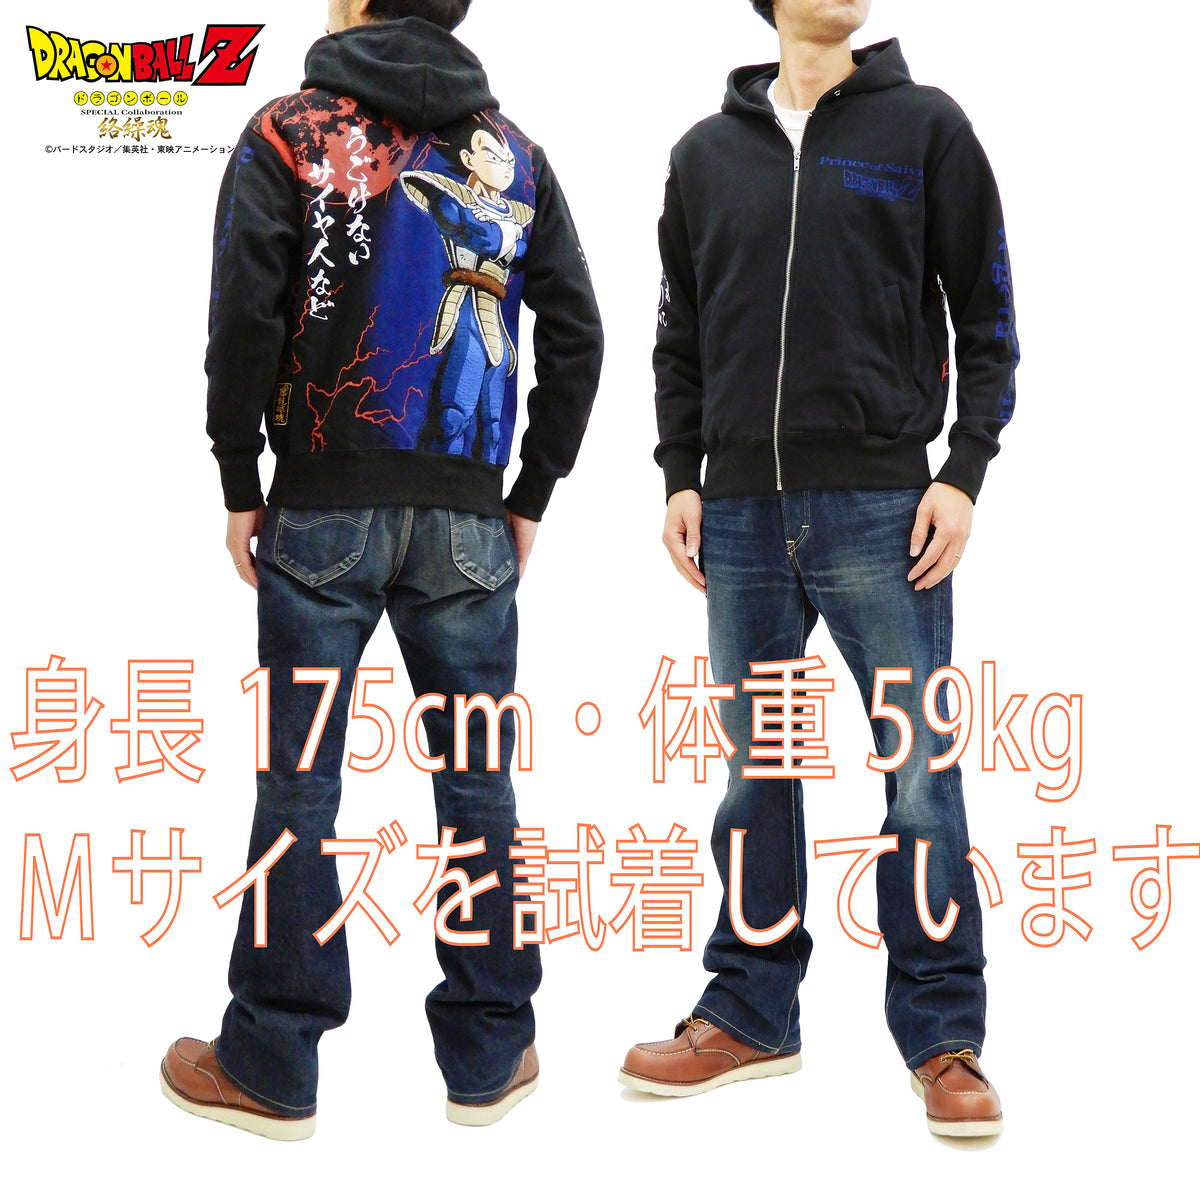 Dragon Ball Z Hoodie Vegeta Saiyan Men's Full Zip Hooded Sweatshirt 294014  Black